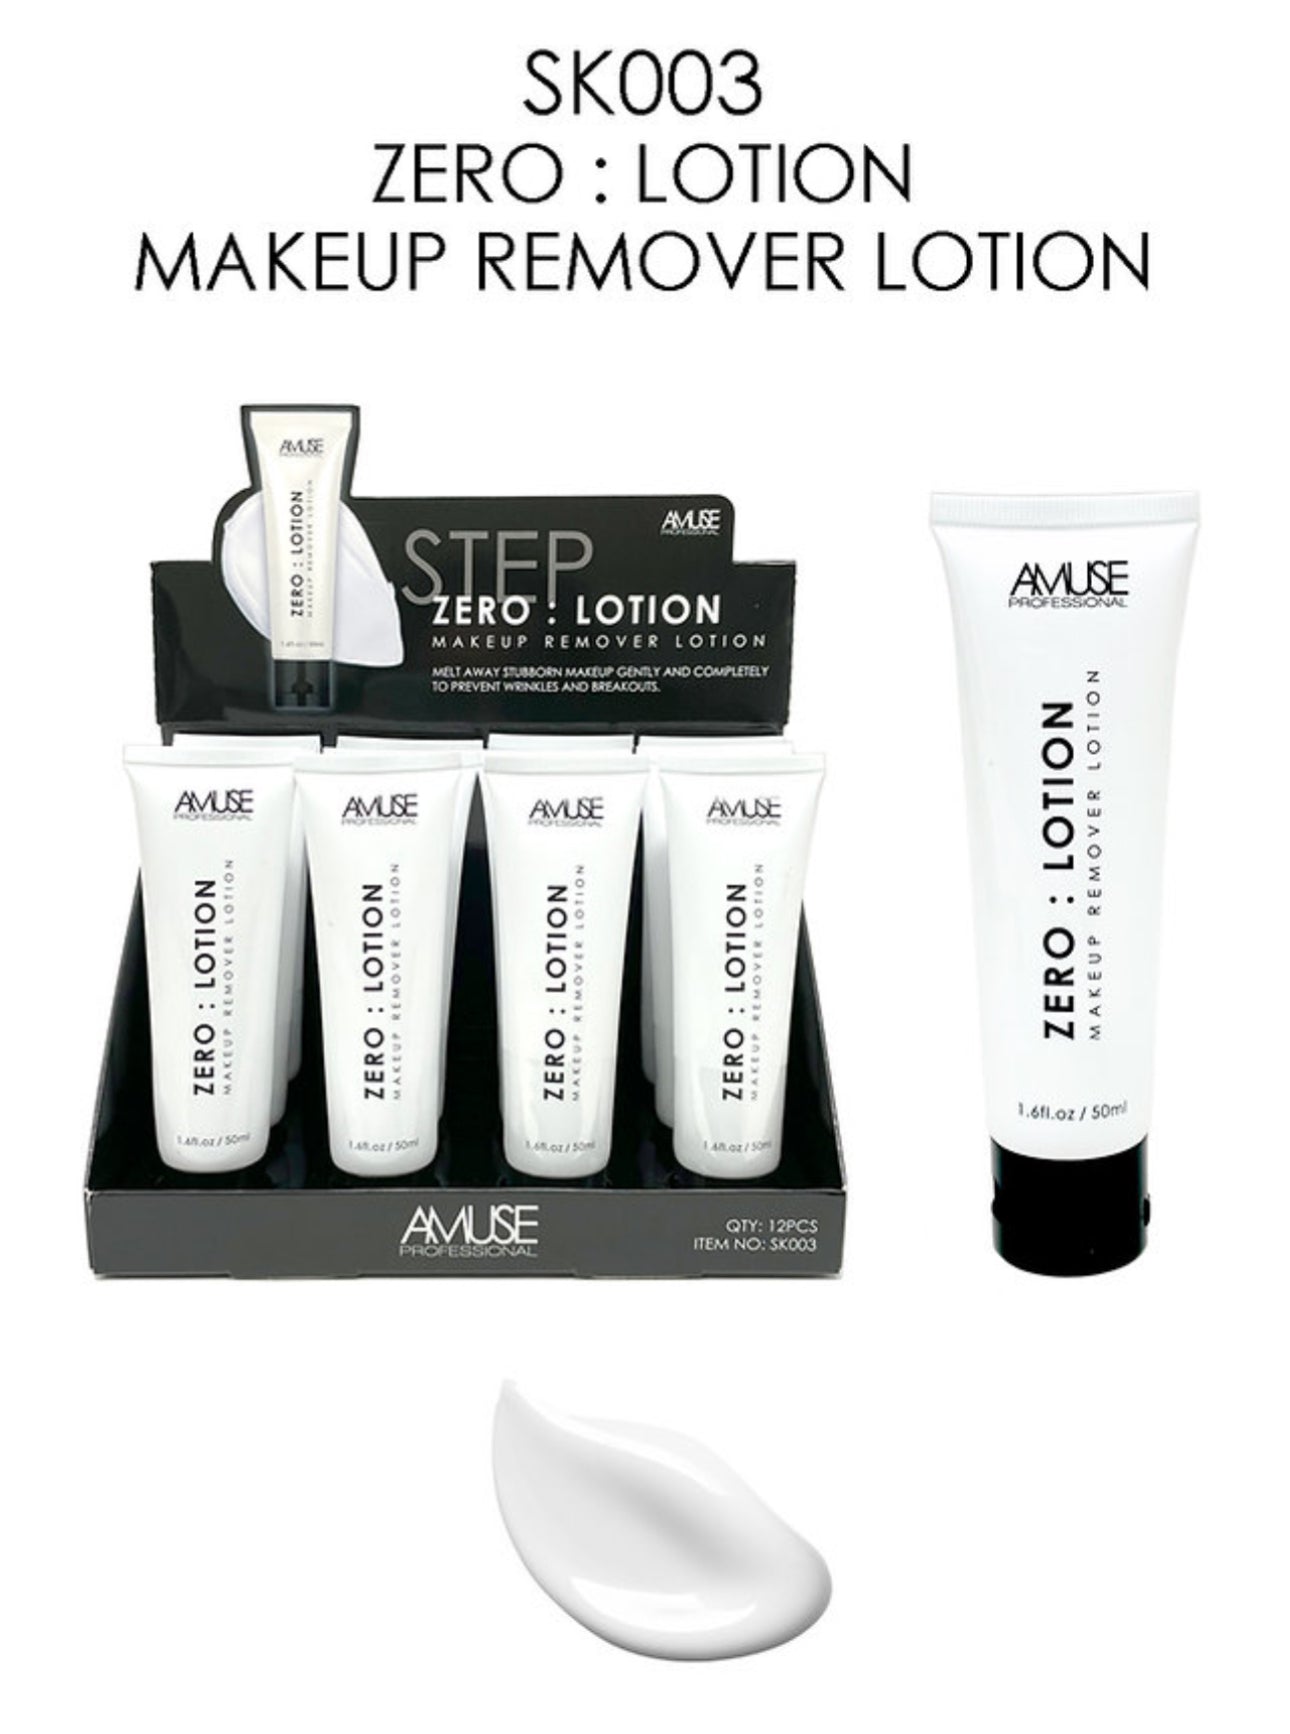 Amuse - Zero : Lotion Makeup Remover Lotion